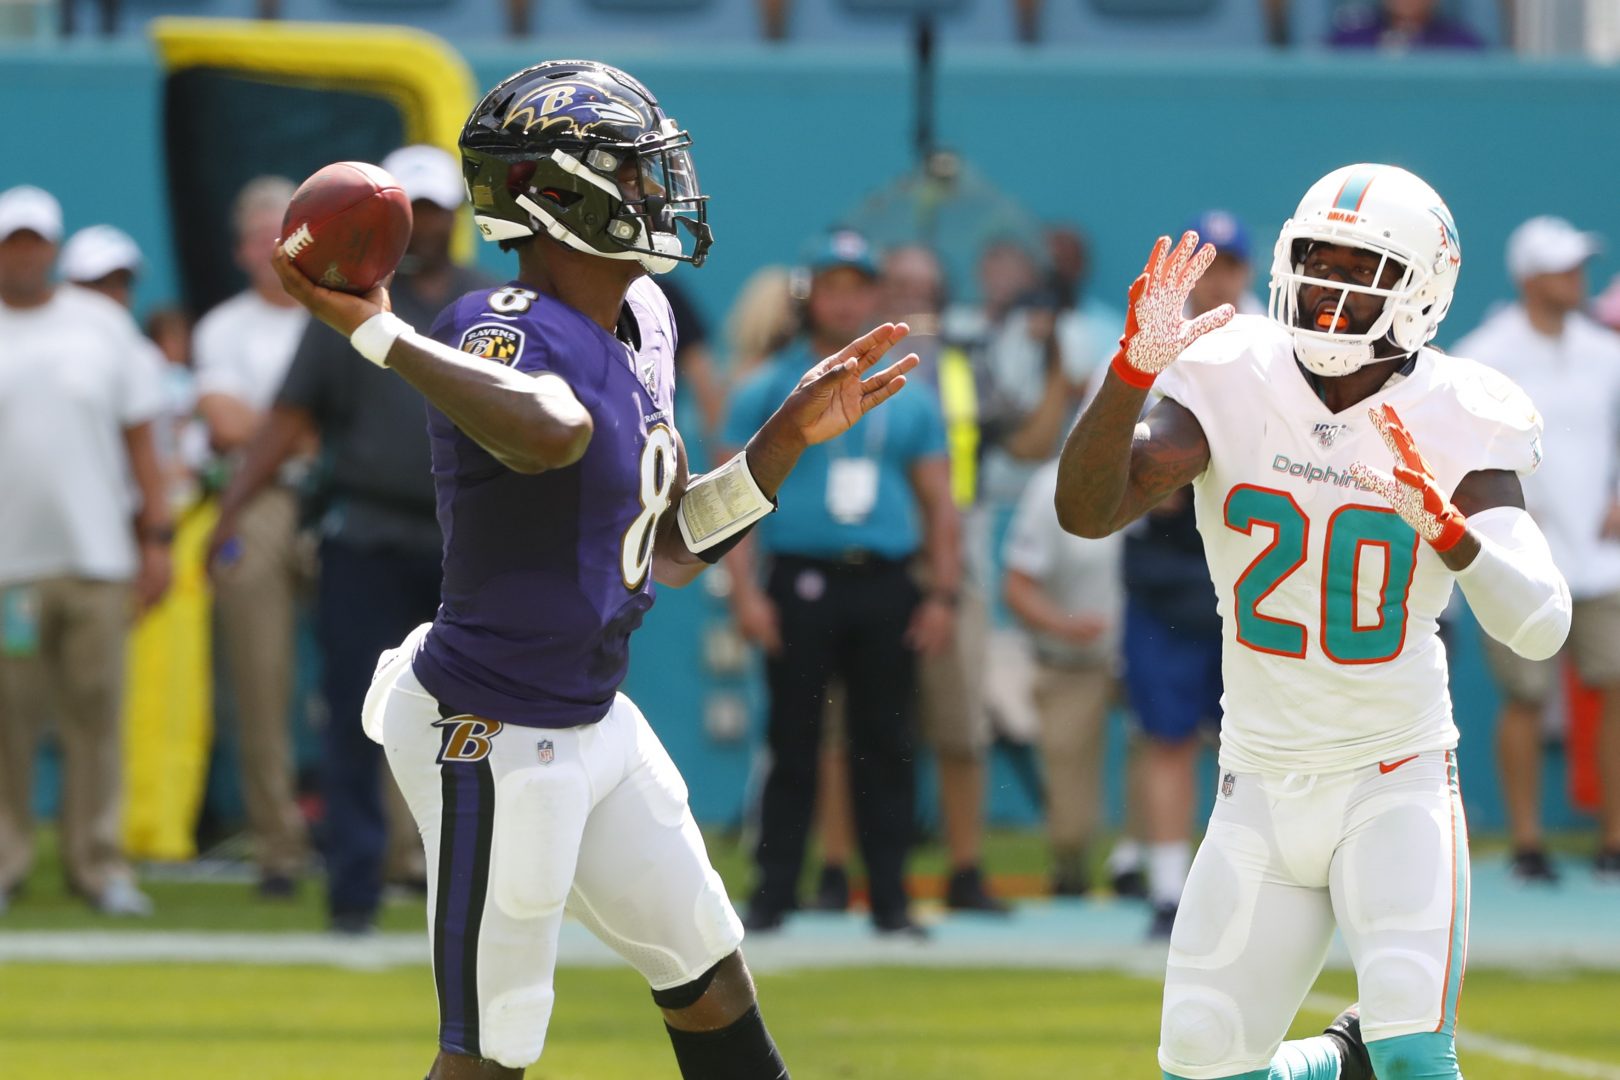 Jackson's 5 TD passes help Ravens drub Dolphins 59-10